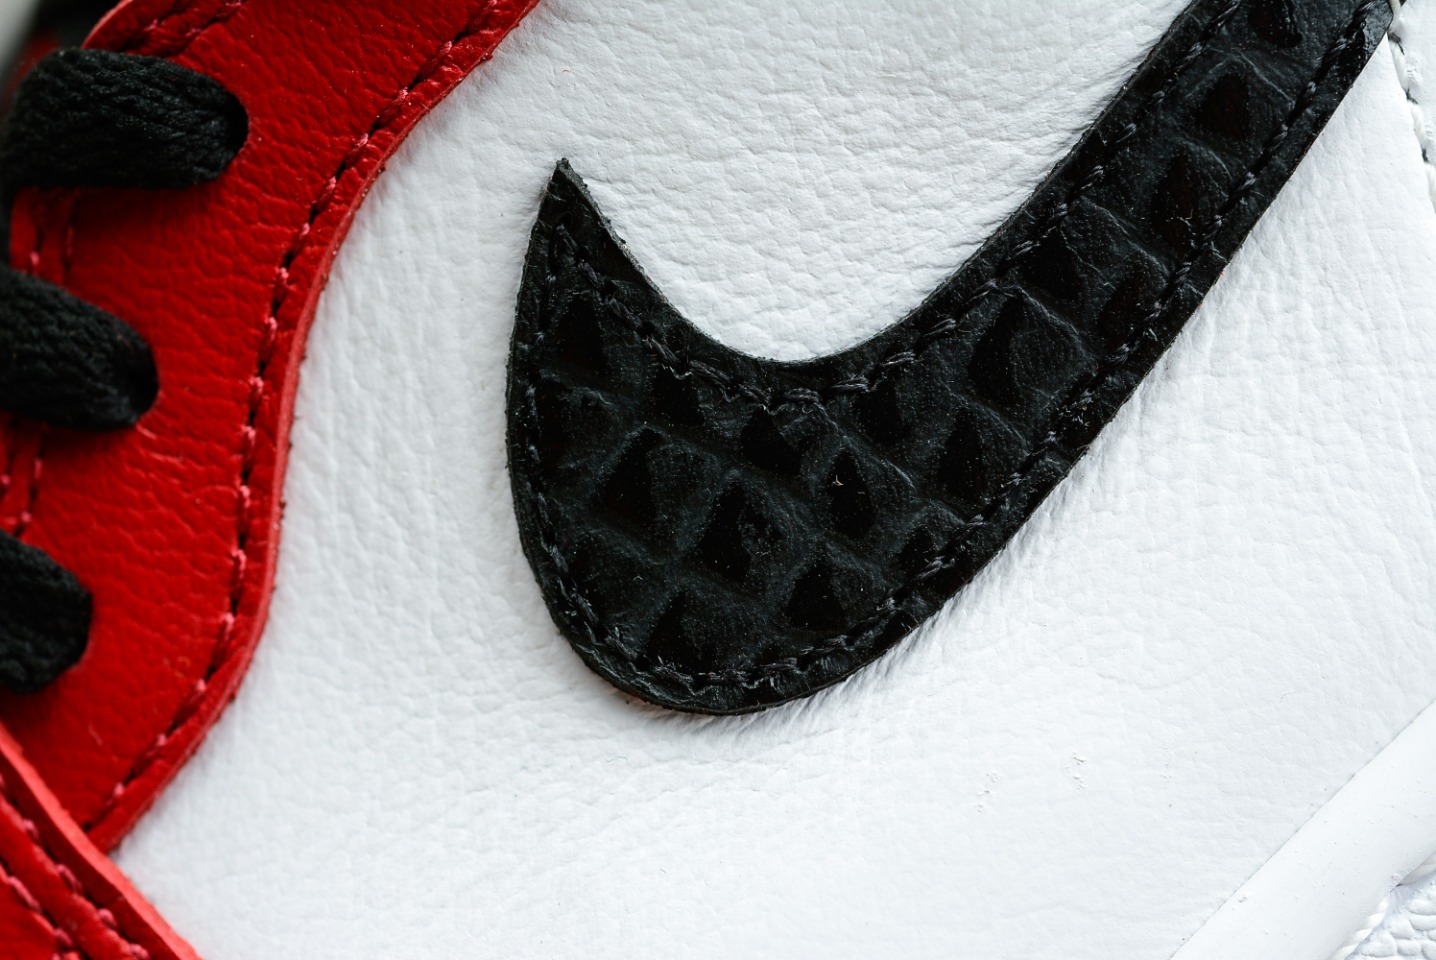 Nike Sneaker Air Jordan1 High Satin Snake in Red